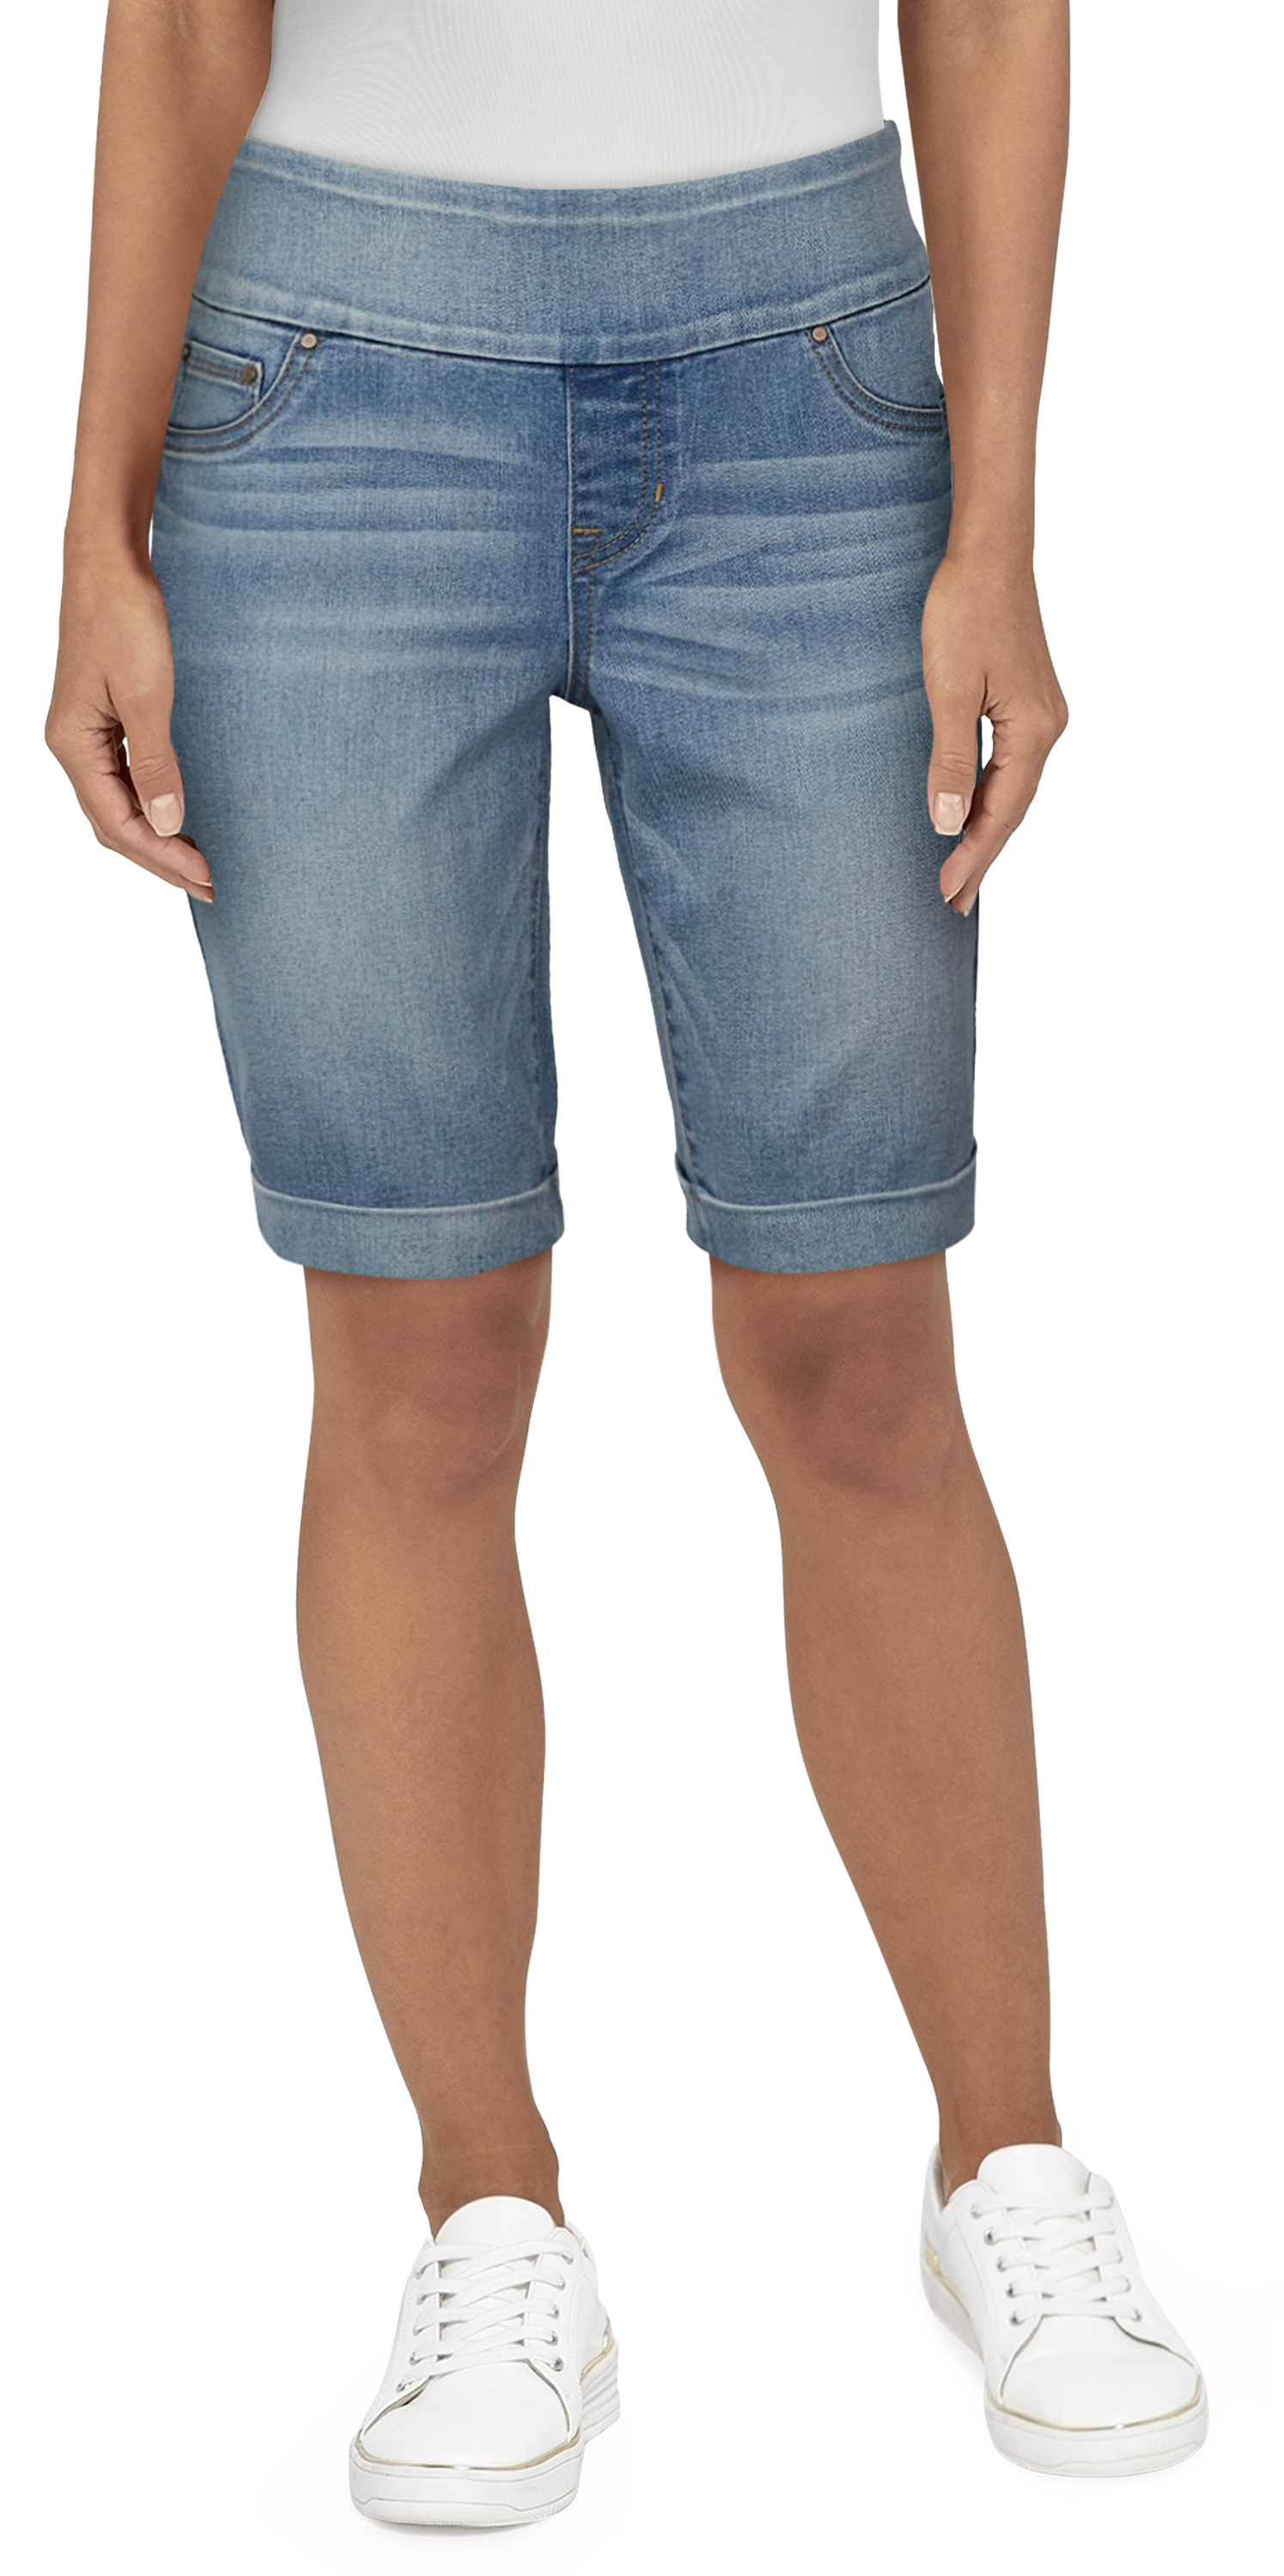 Natural Reflections Comfort Waist Bermuda Shorts for Ladies - Light Wash - 12